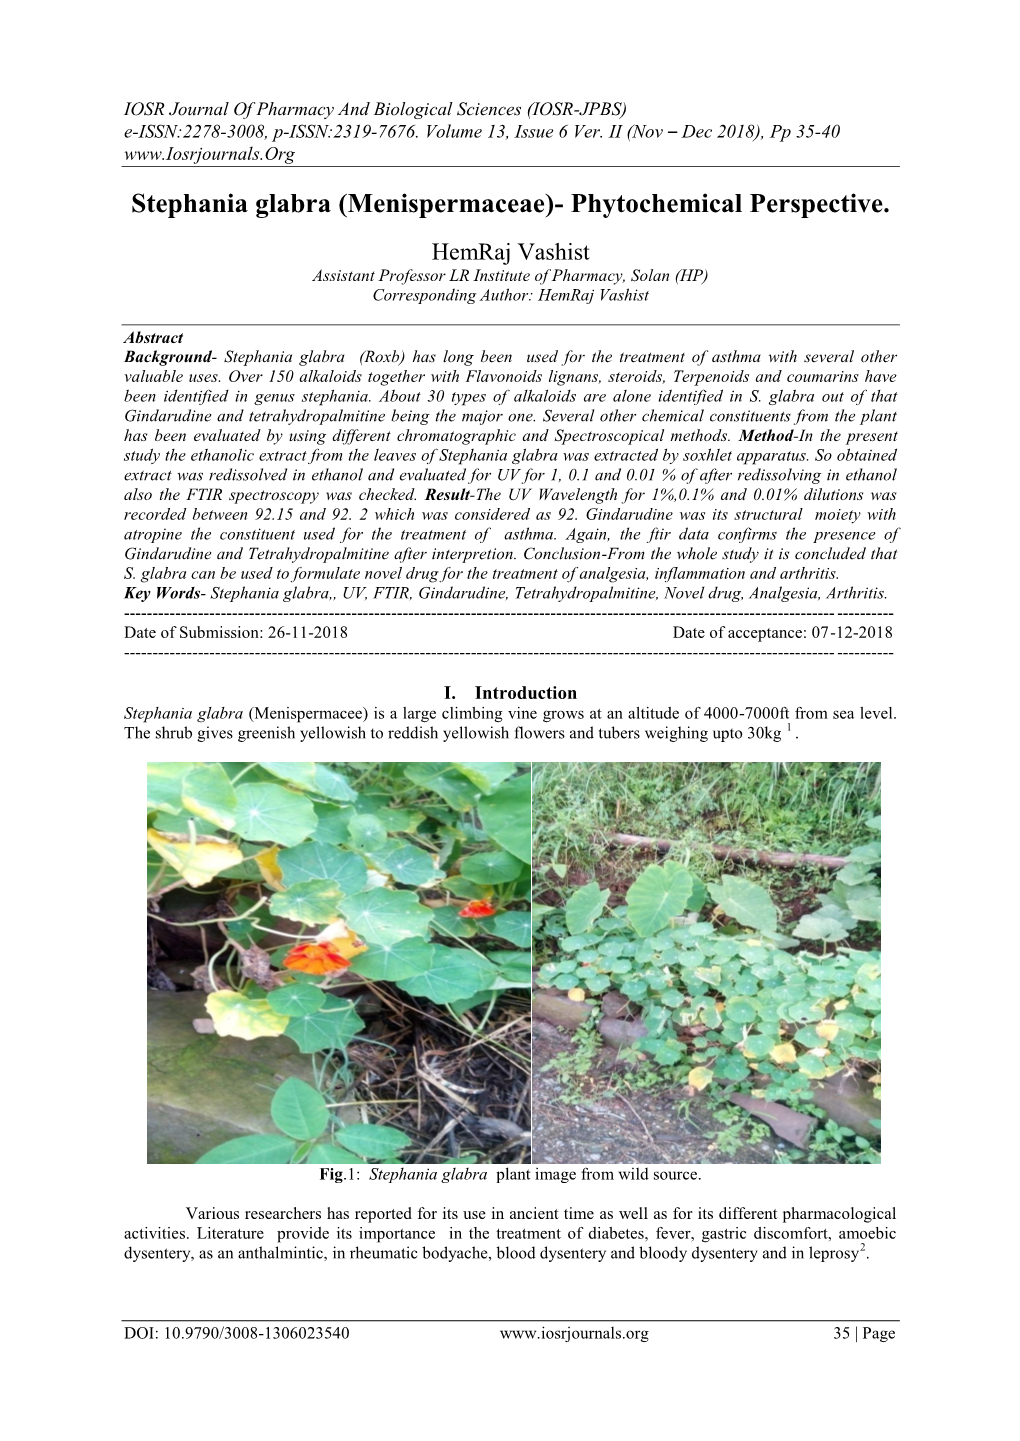 Stephania Glabra (Menispermaceae)- Phytochemical Perspective